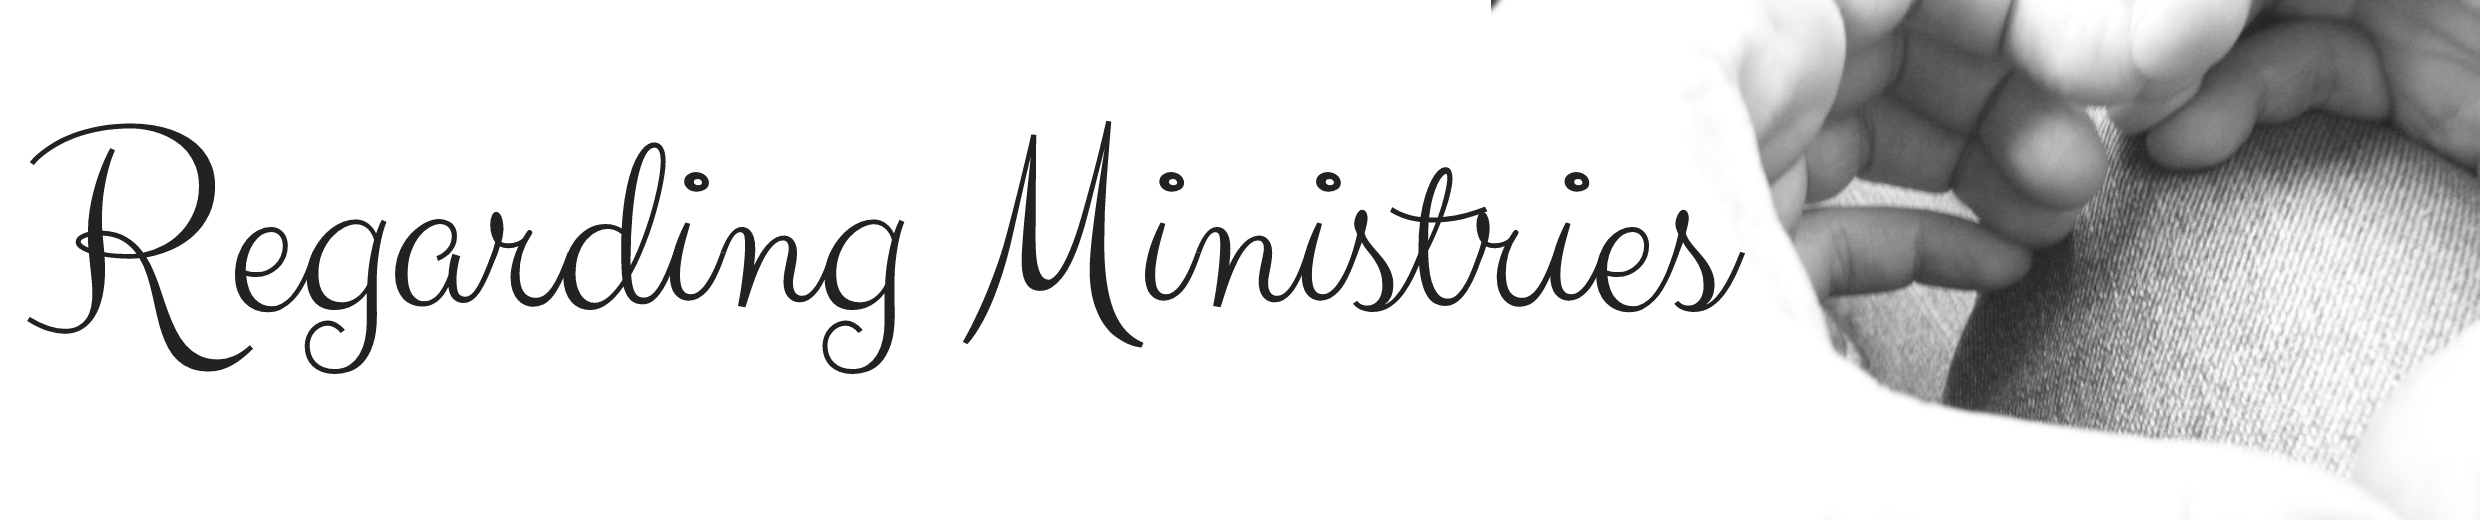 Regarding Ministries